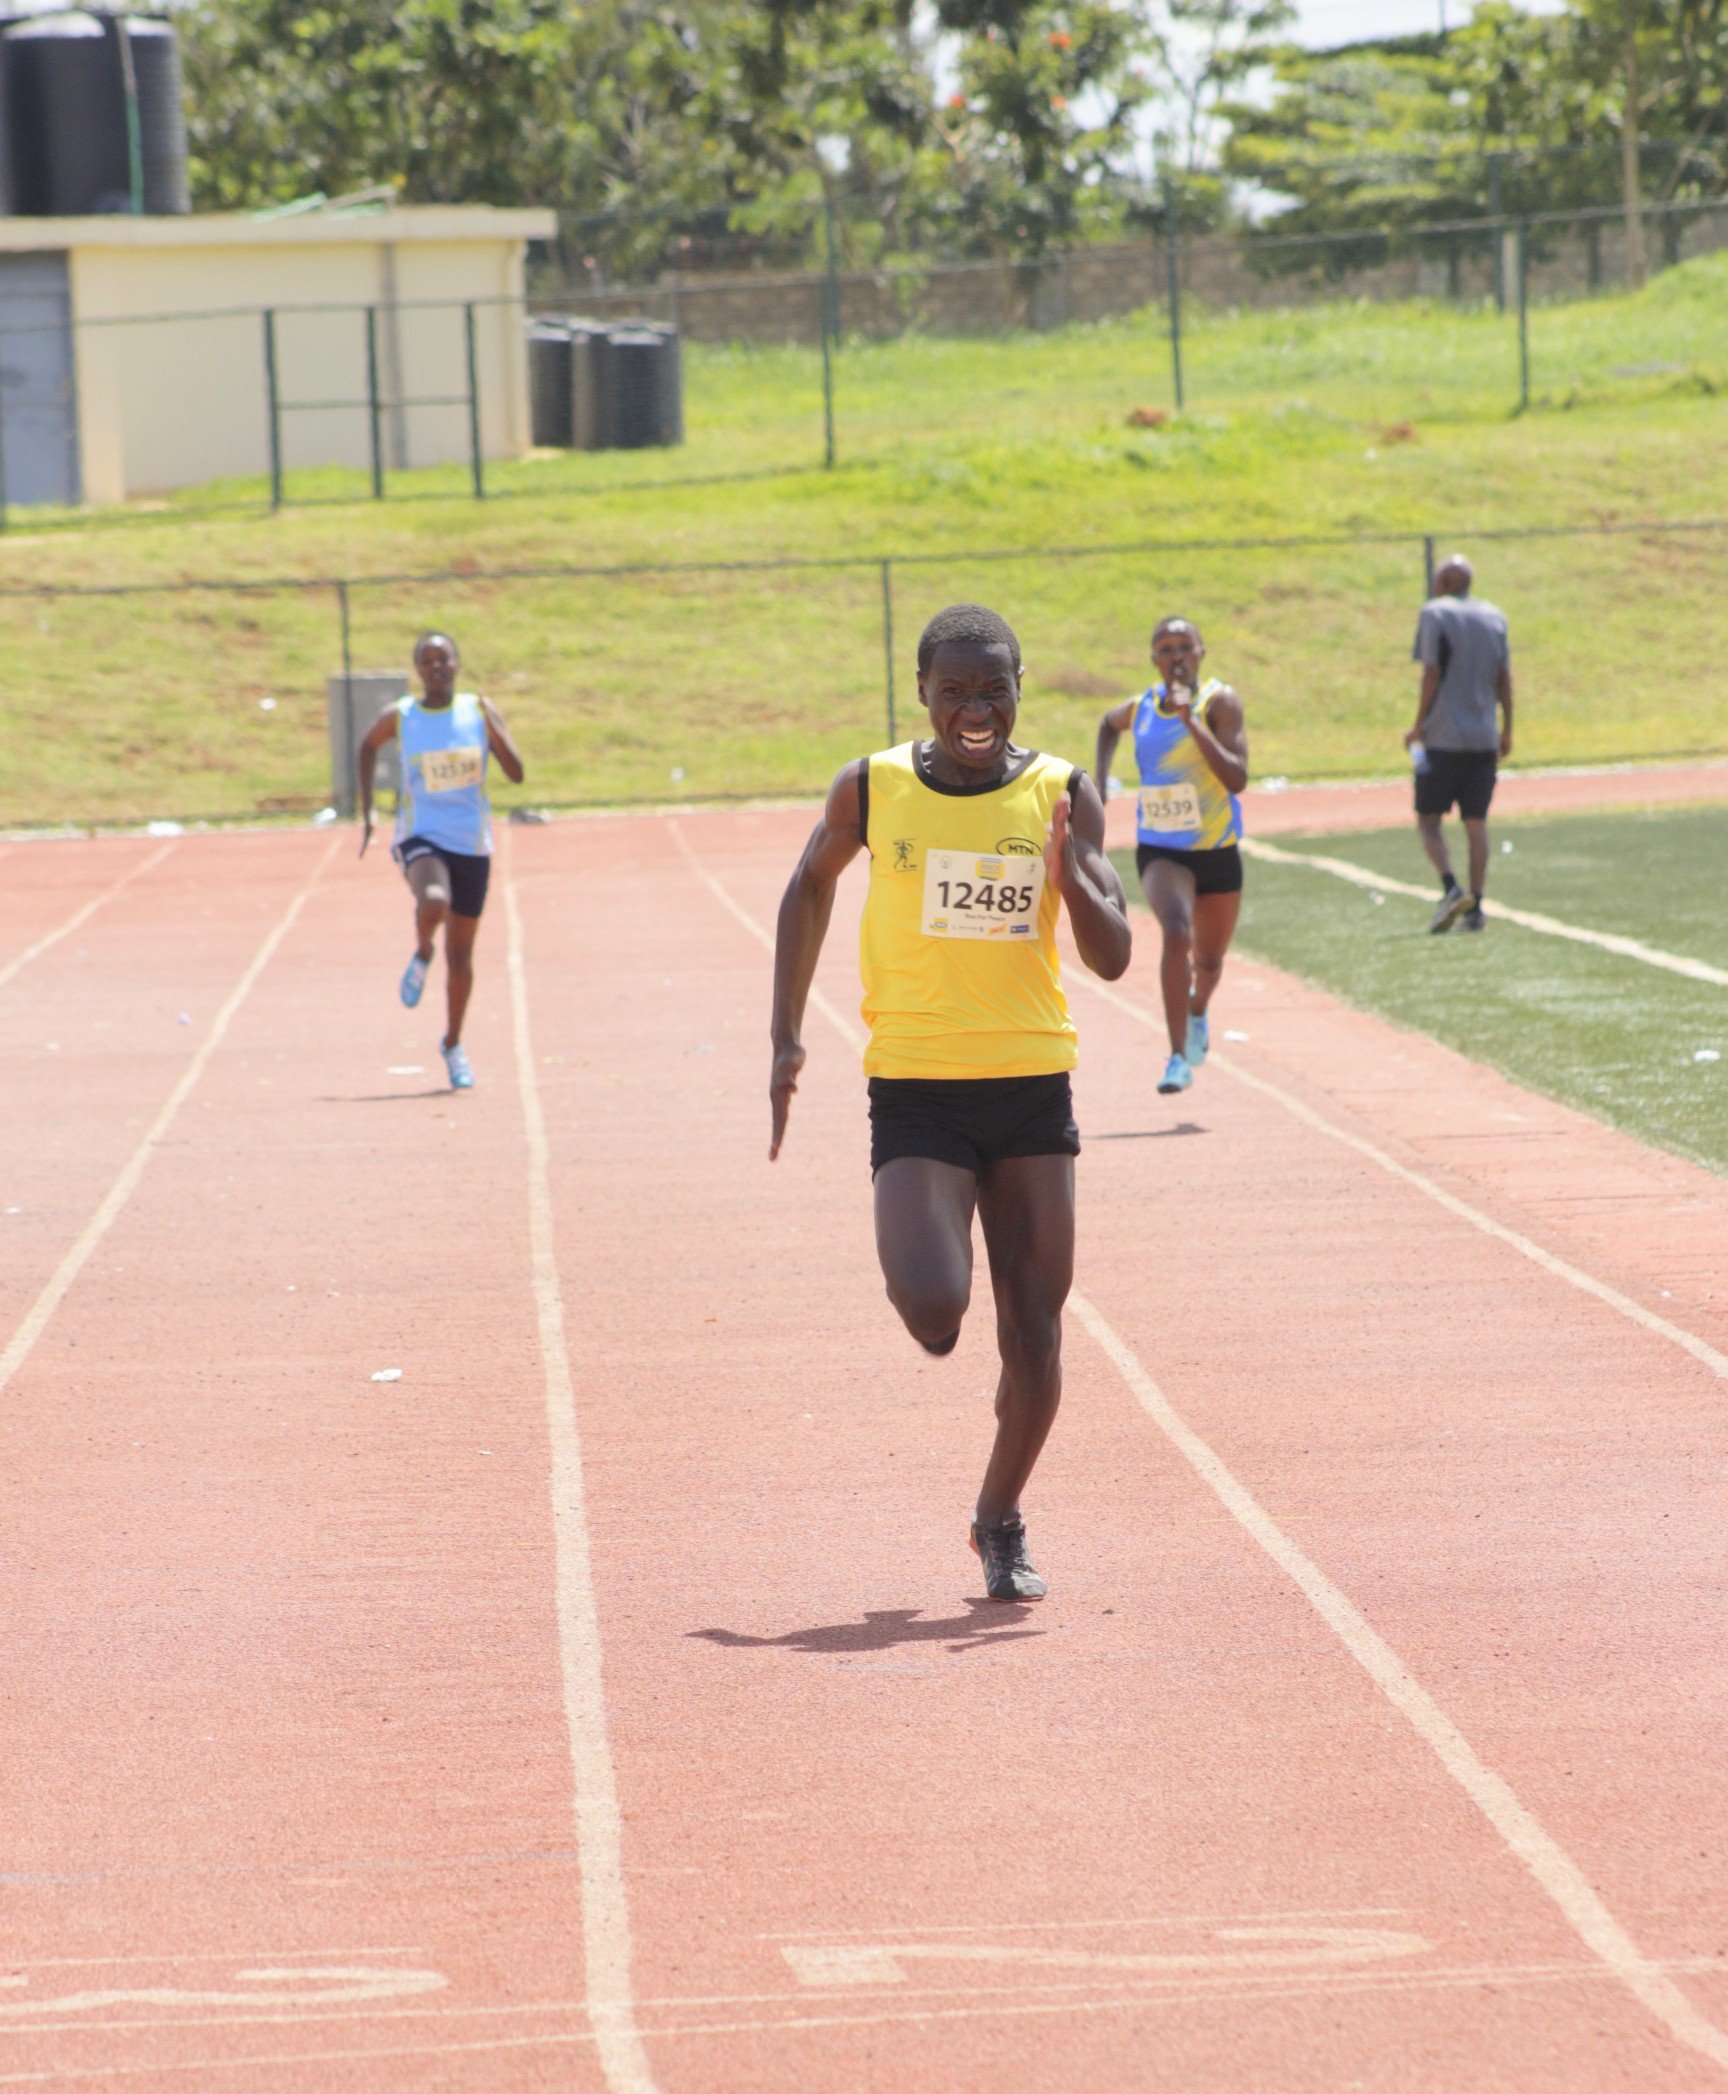 Umutesi Uwase Magnifique yaciye agahigo muri shampiyona y'u Rwanda ko kuba yirutse metero 400 akoresheje amasegonda 53 n'ibyijana 79